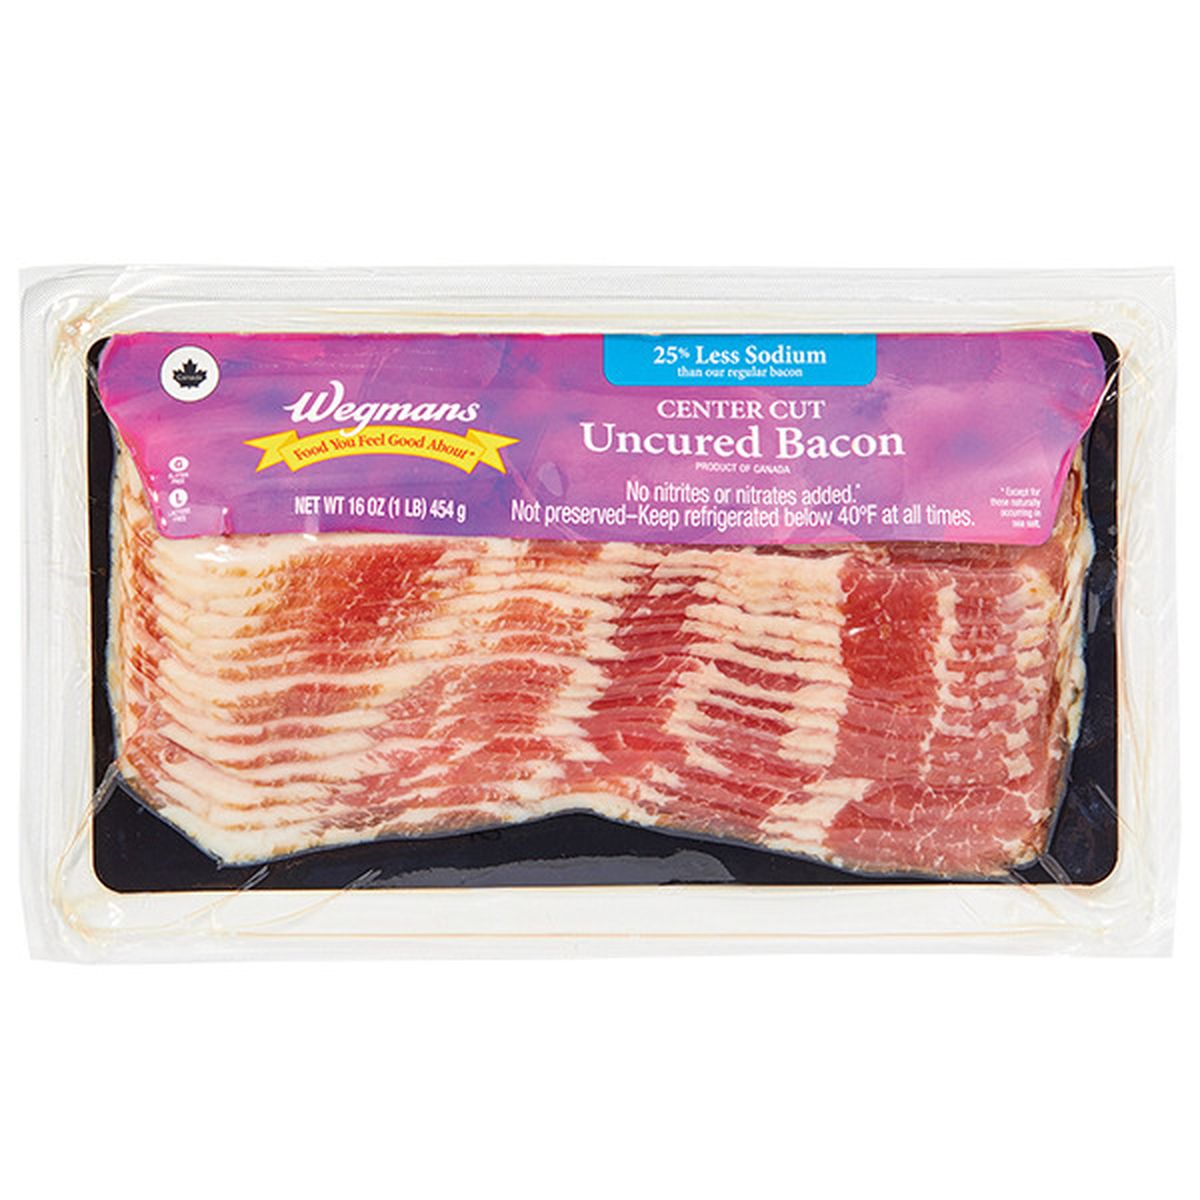 Calories in Wegmans Center Cut Uncured Bacon, 25% Less Sodium